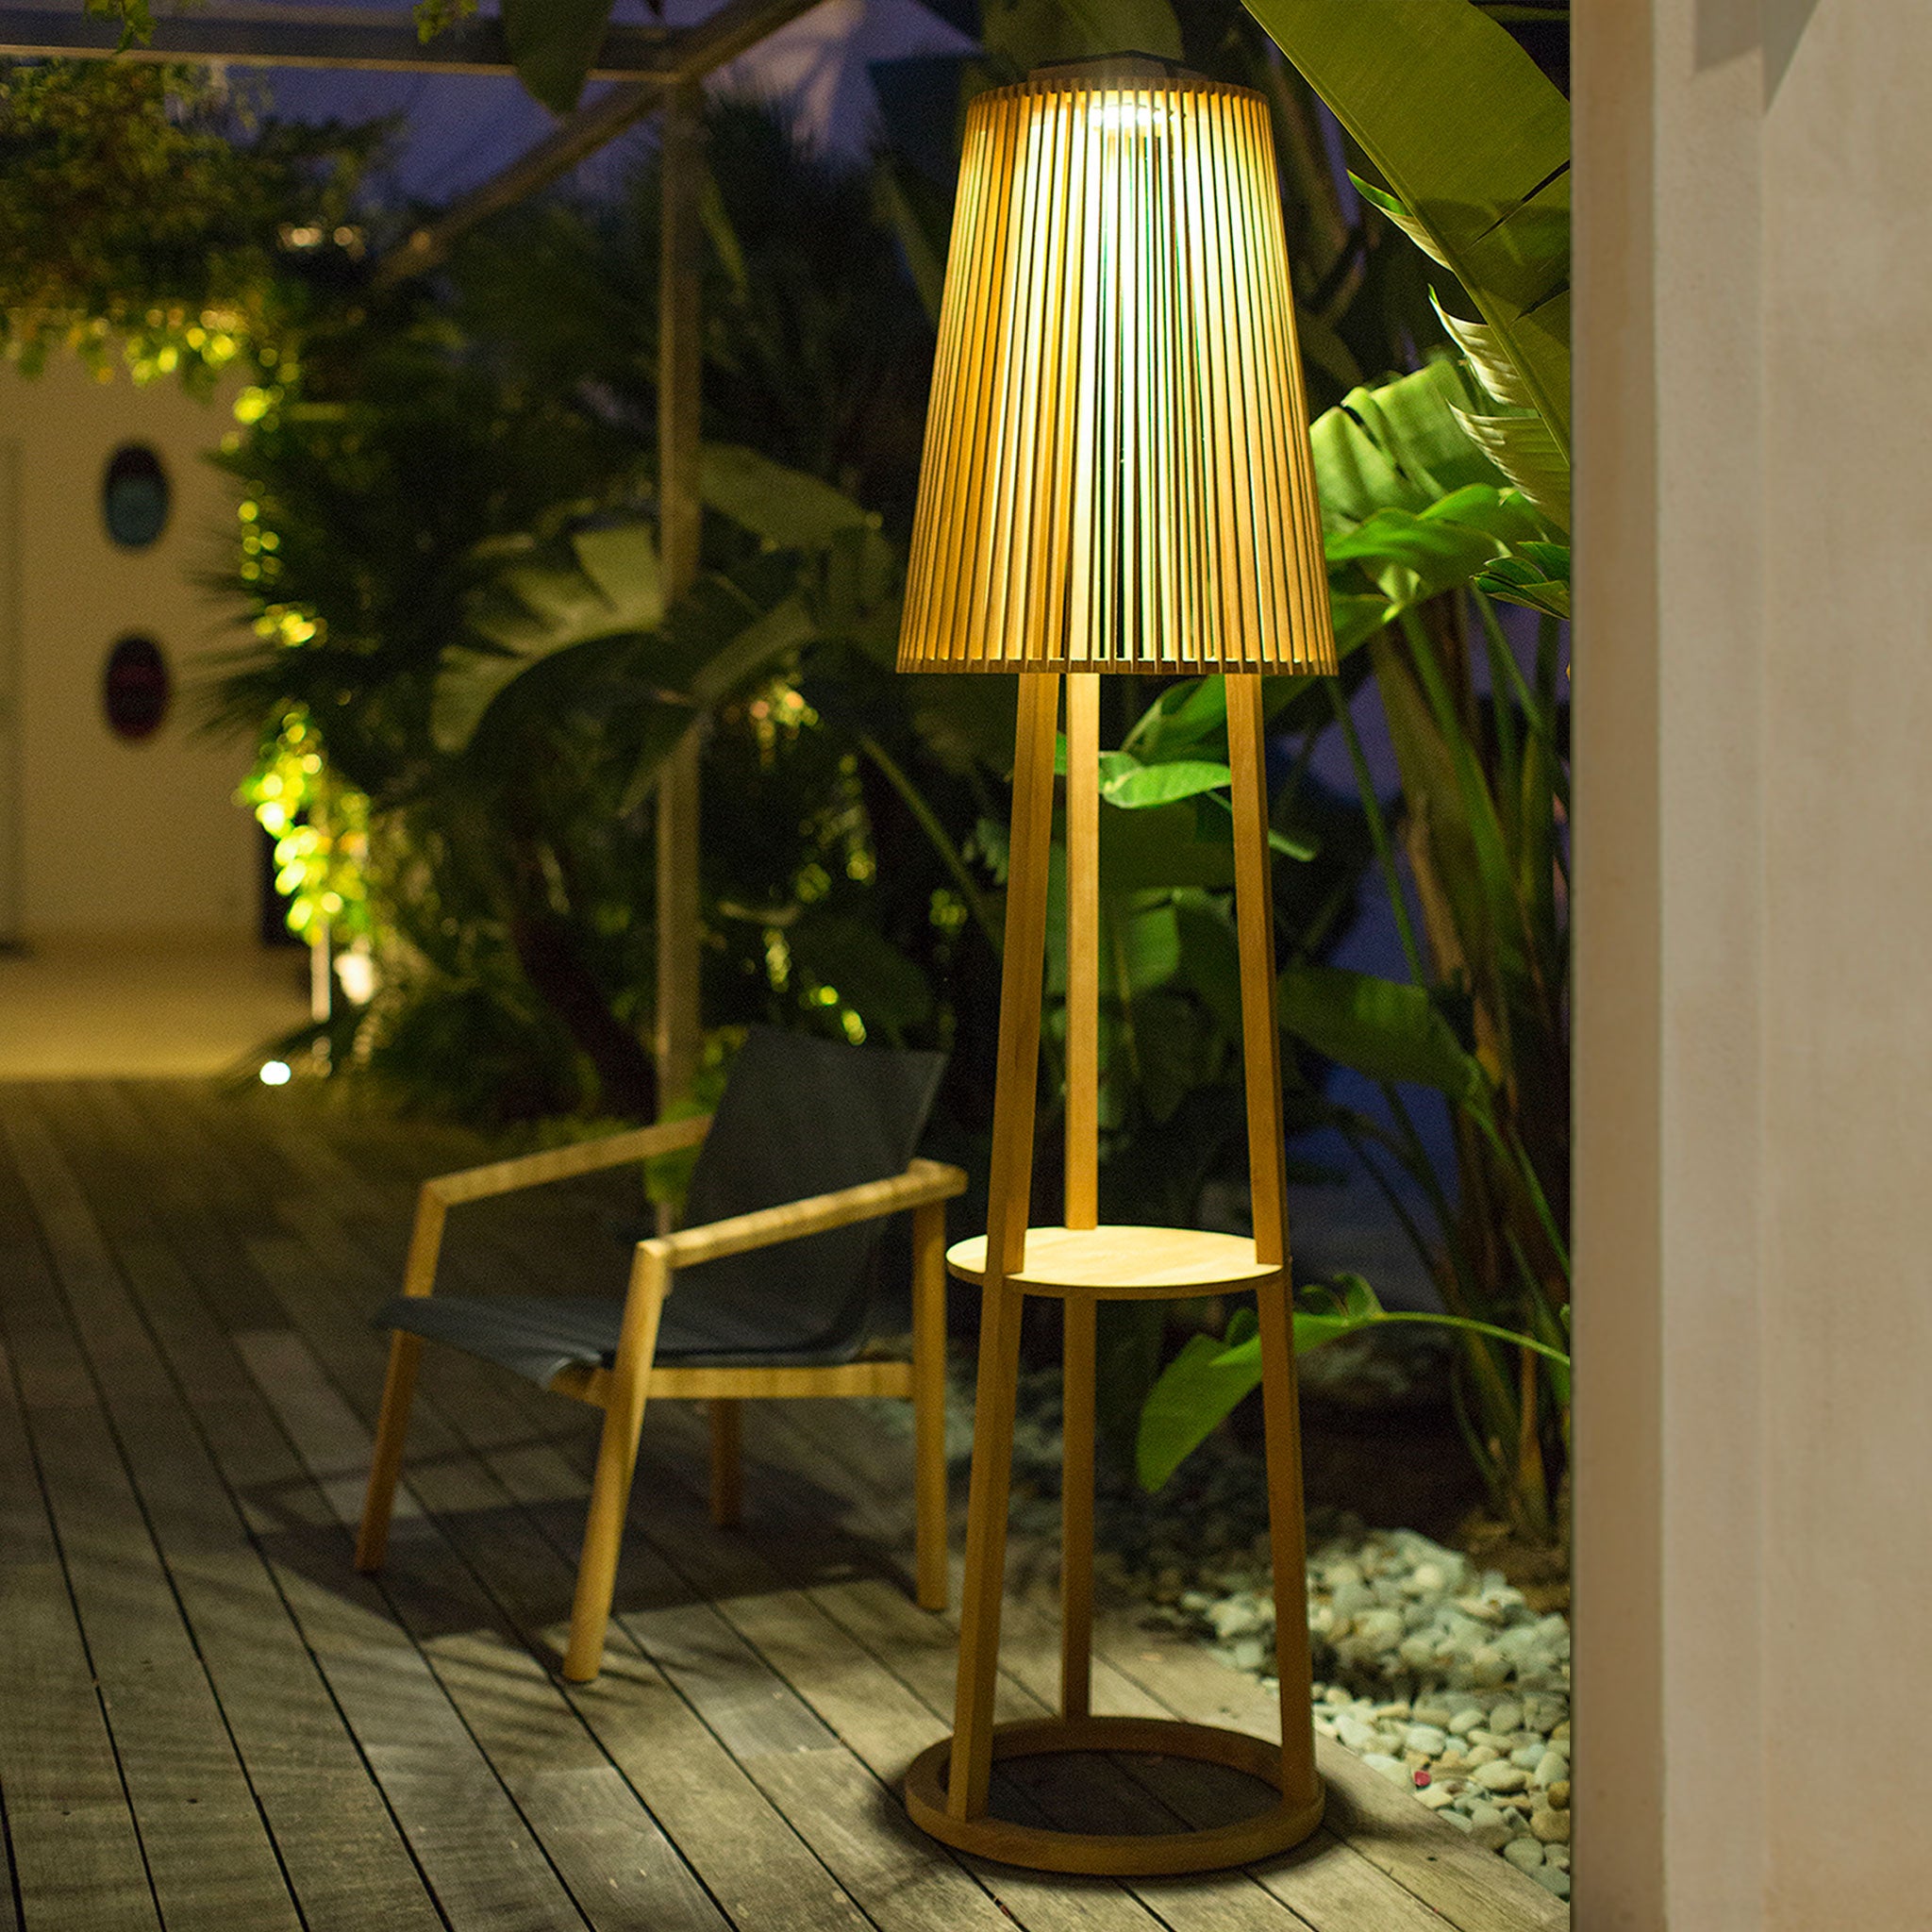 Palma floor lamp lighting up patio and chair